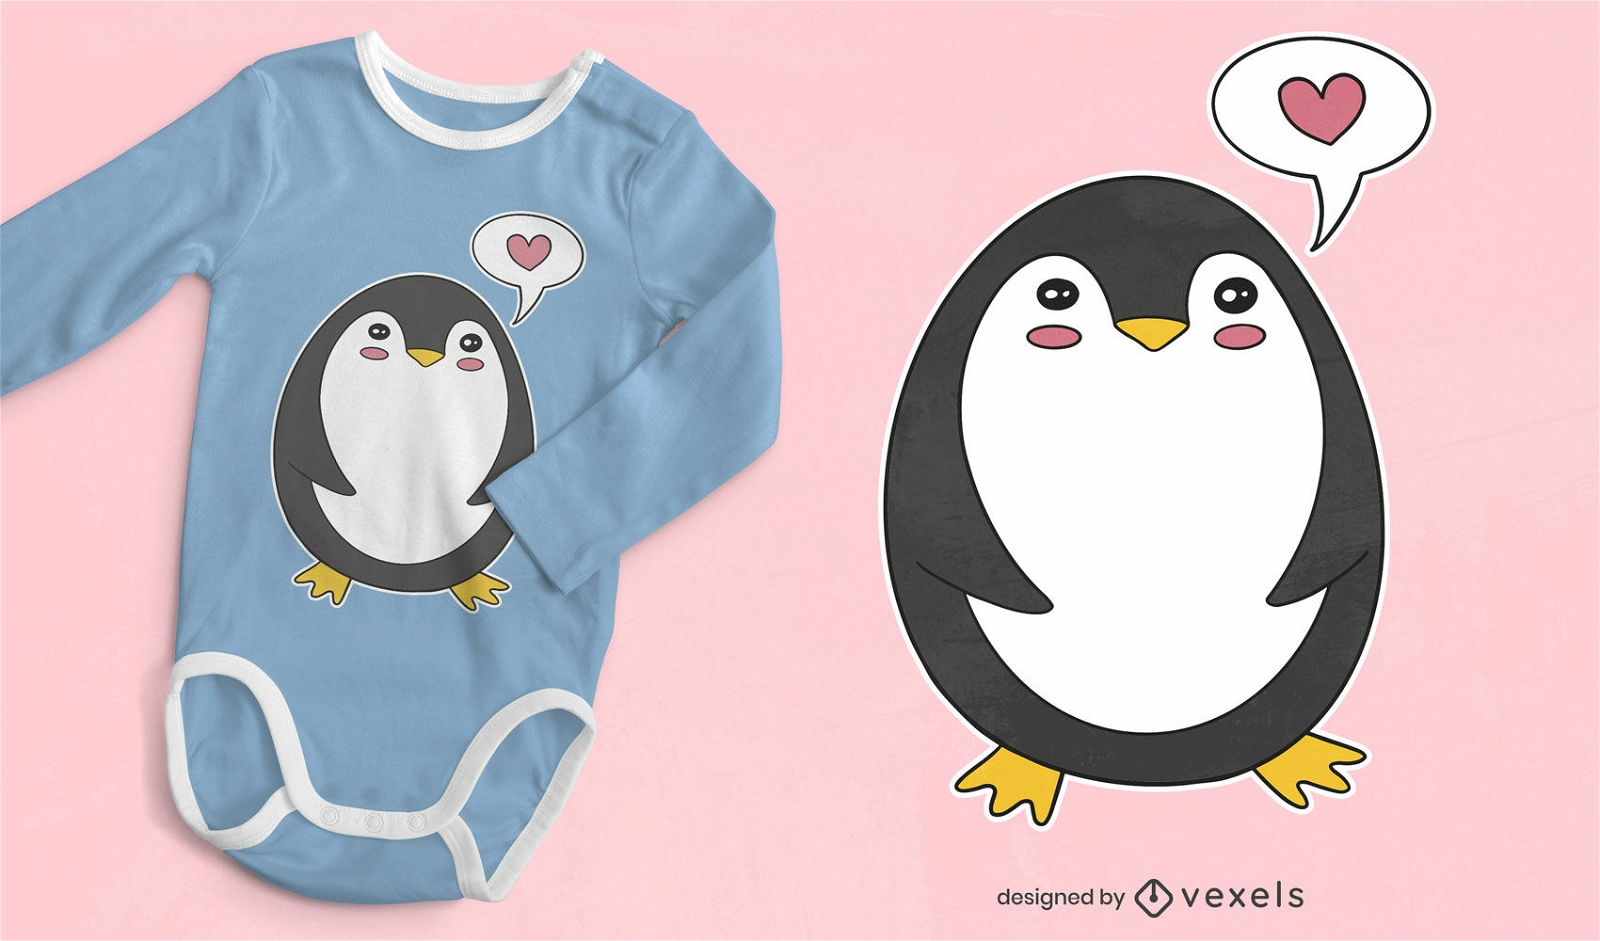 Cute penguin character t-shirt design